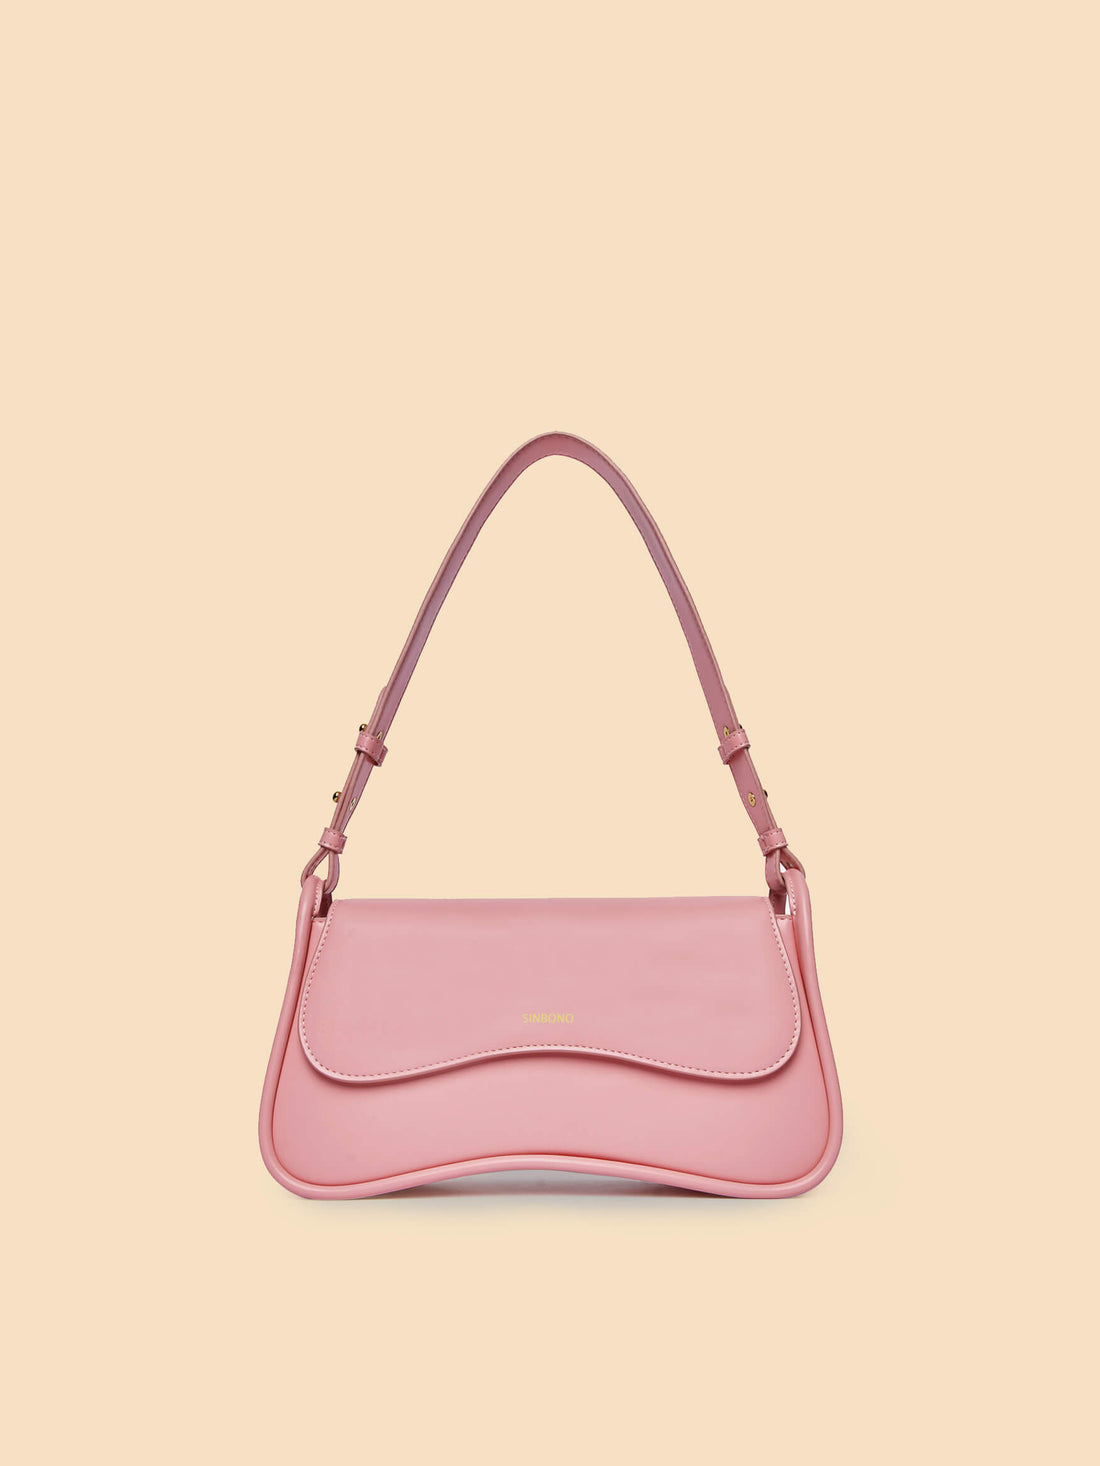 SINBONO Zoe Pink Shoulder Bag - Top Quality Women Leather Bag